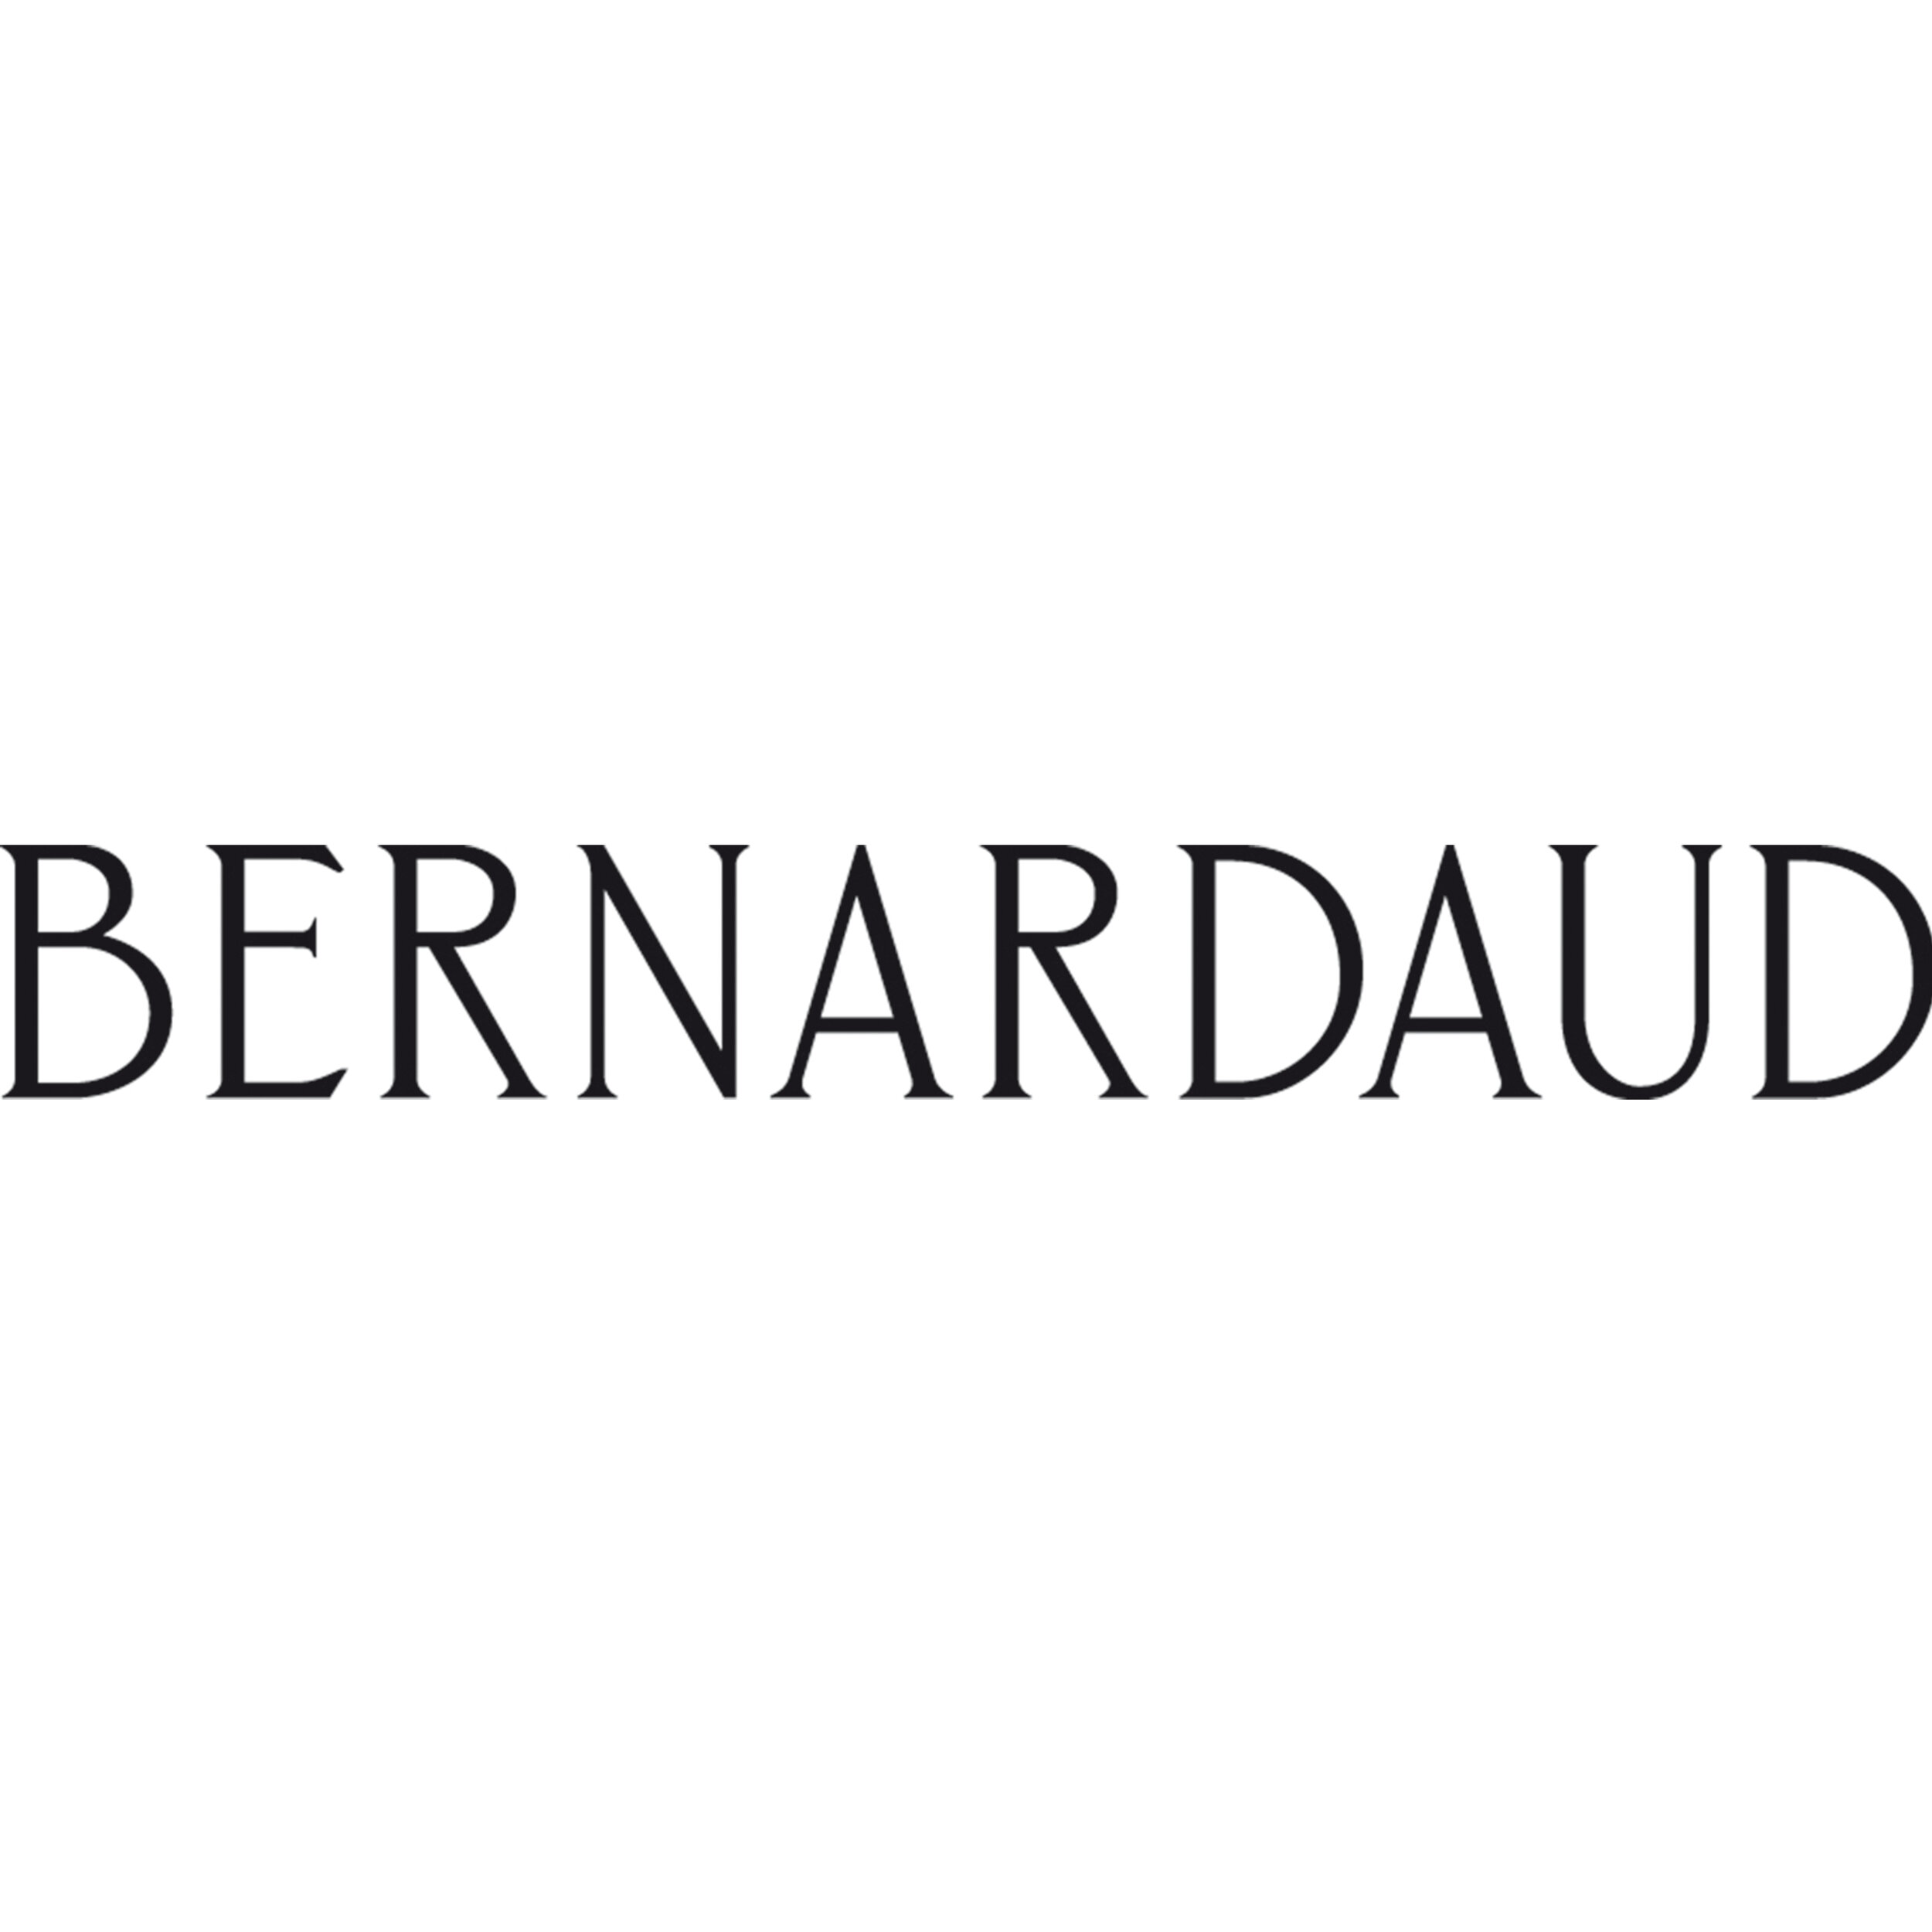 Bernardaud fitted.jpg